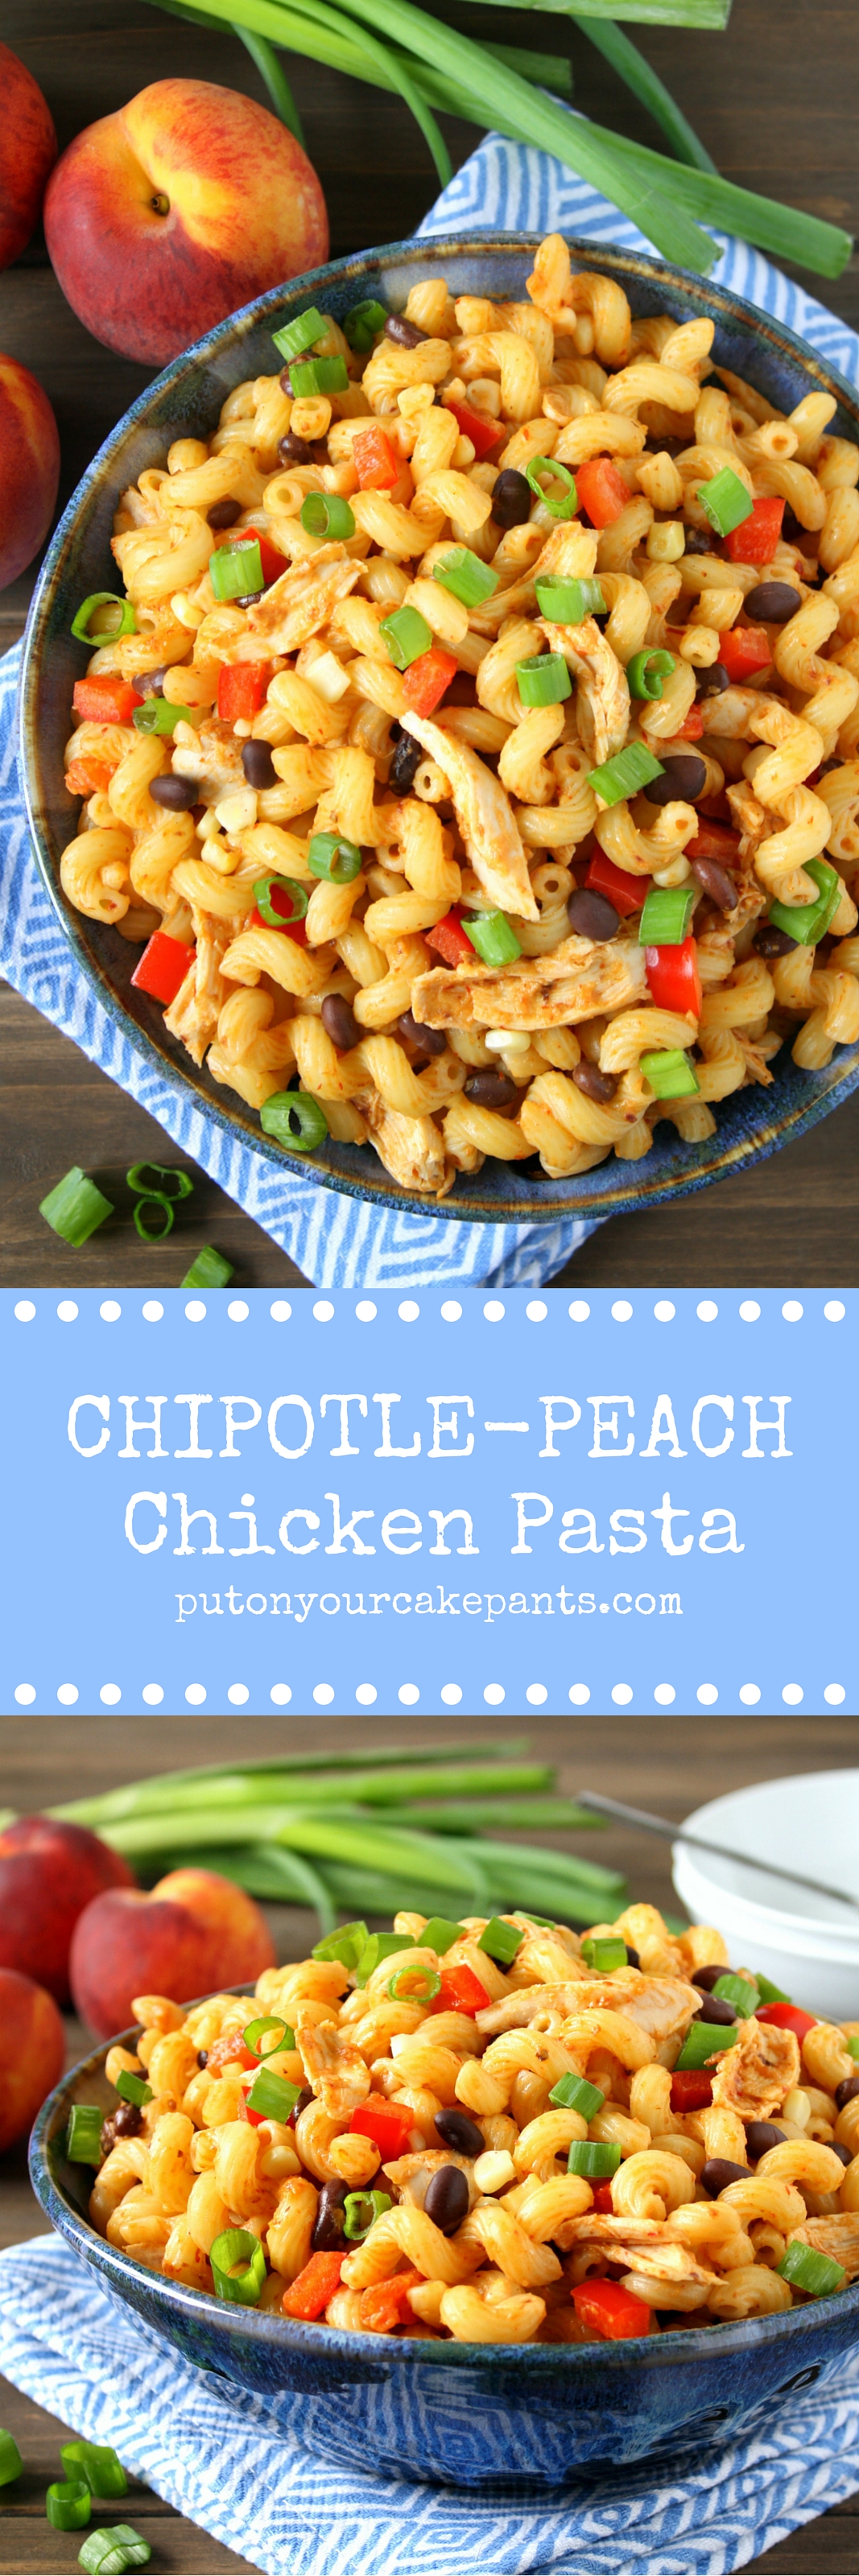 chipotle-peach chicken pasta